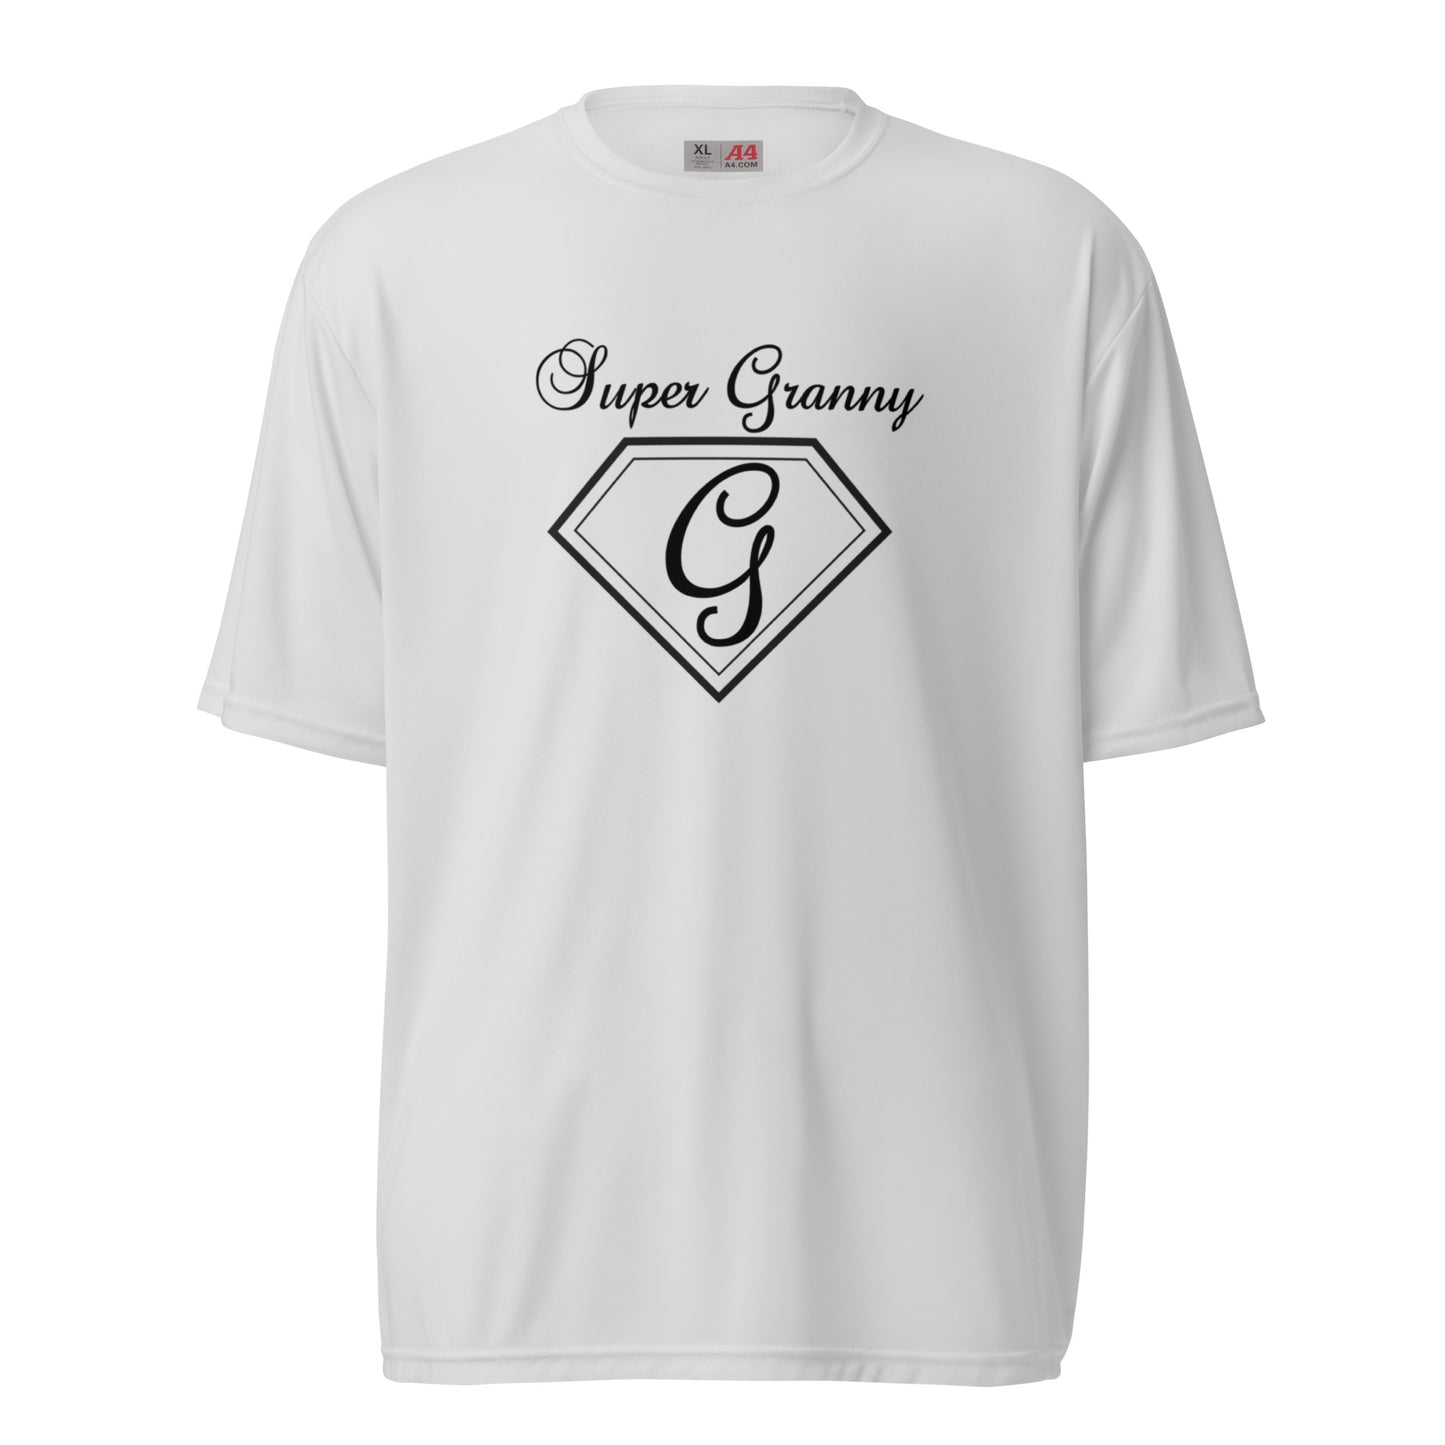 Super Granny unisex performance crew neck t-shirt - Black Print